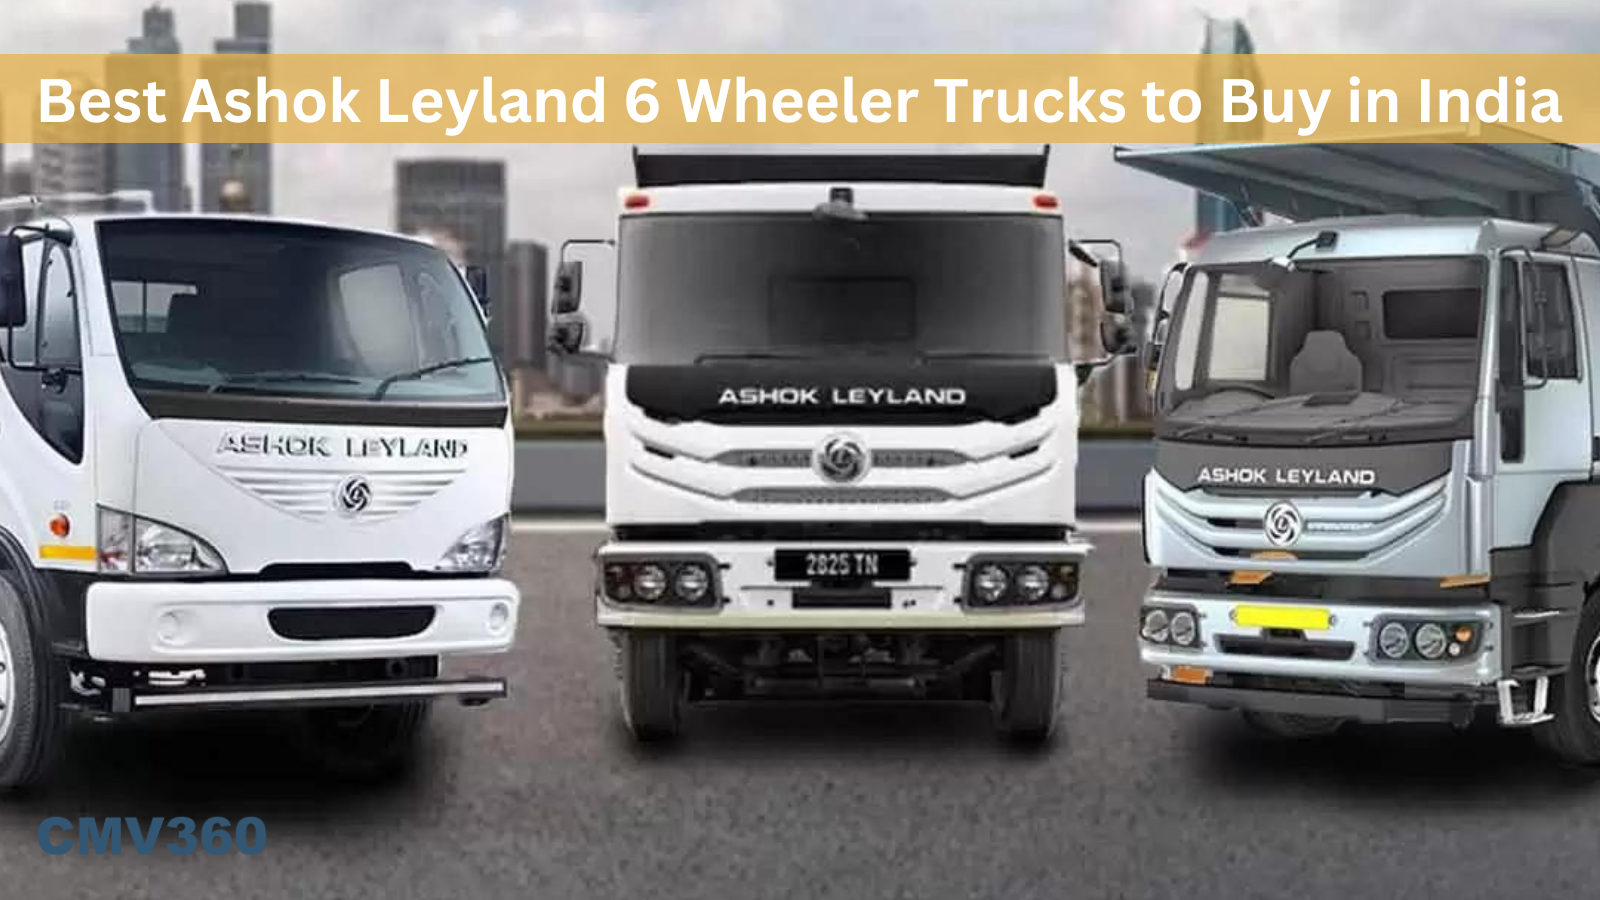 Best Ashok Leyland 6 Wheeler Trucks to Buy in India